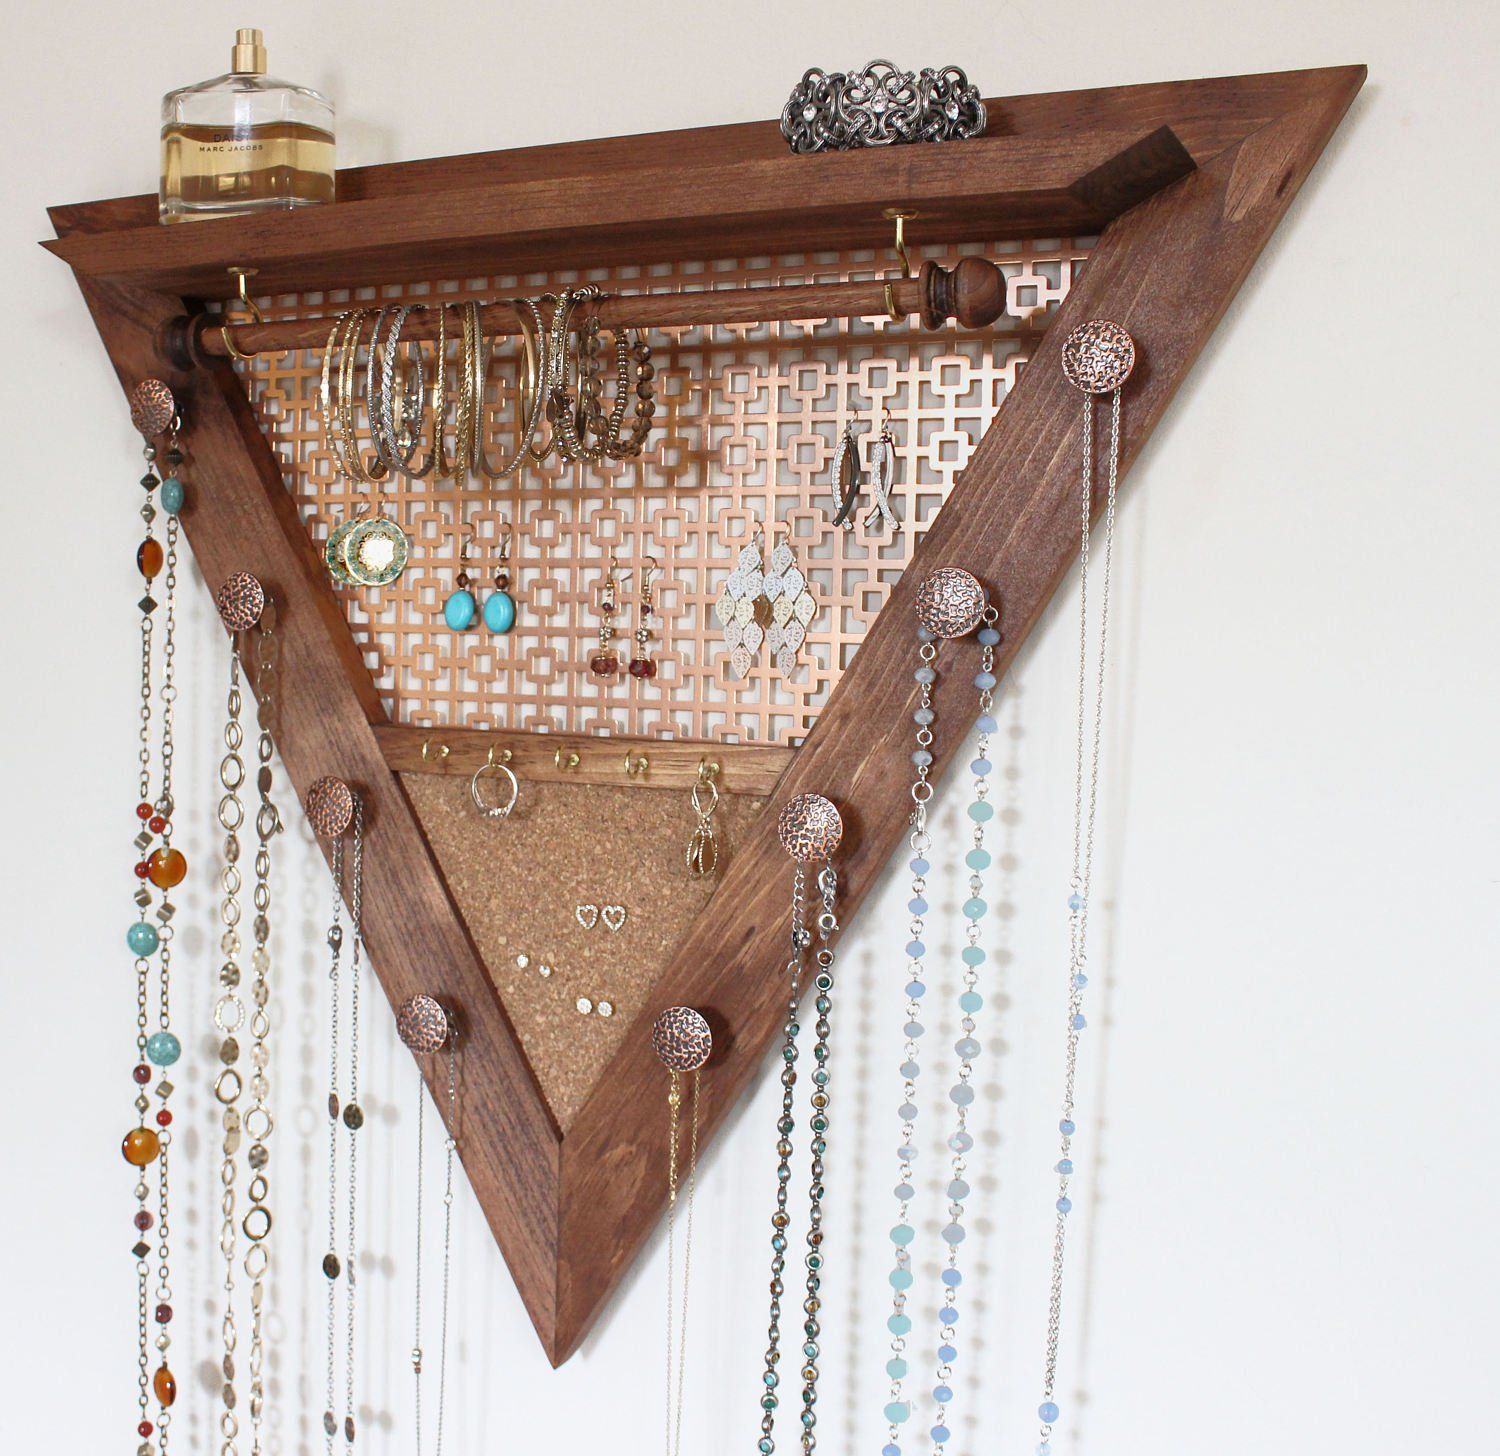 Wooden hanging jewelry organizer